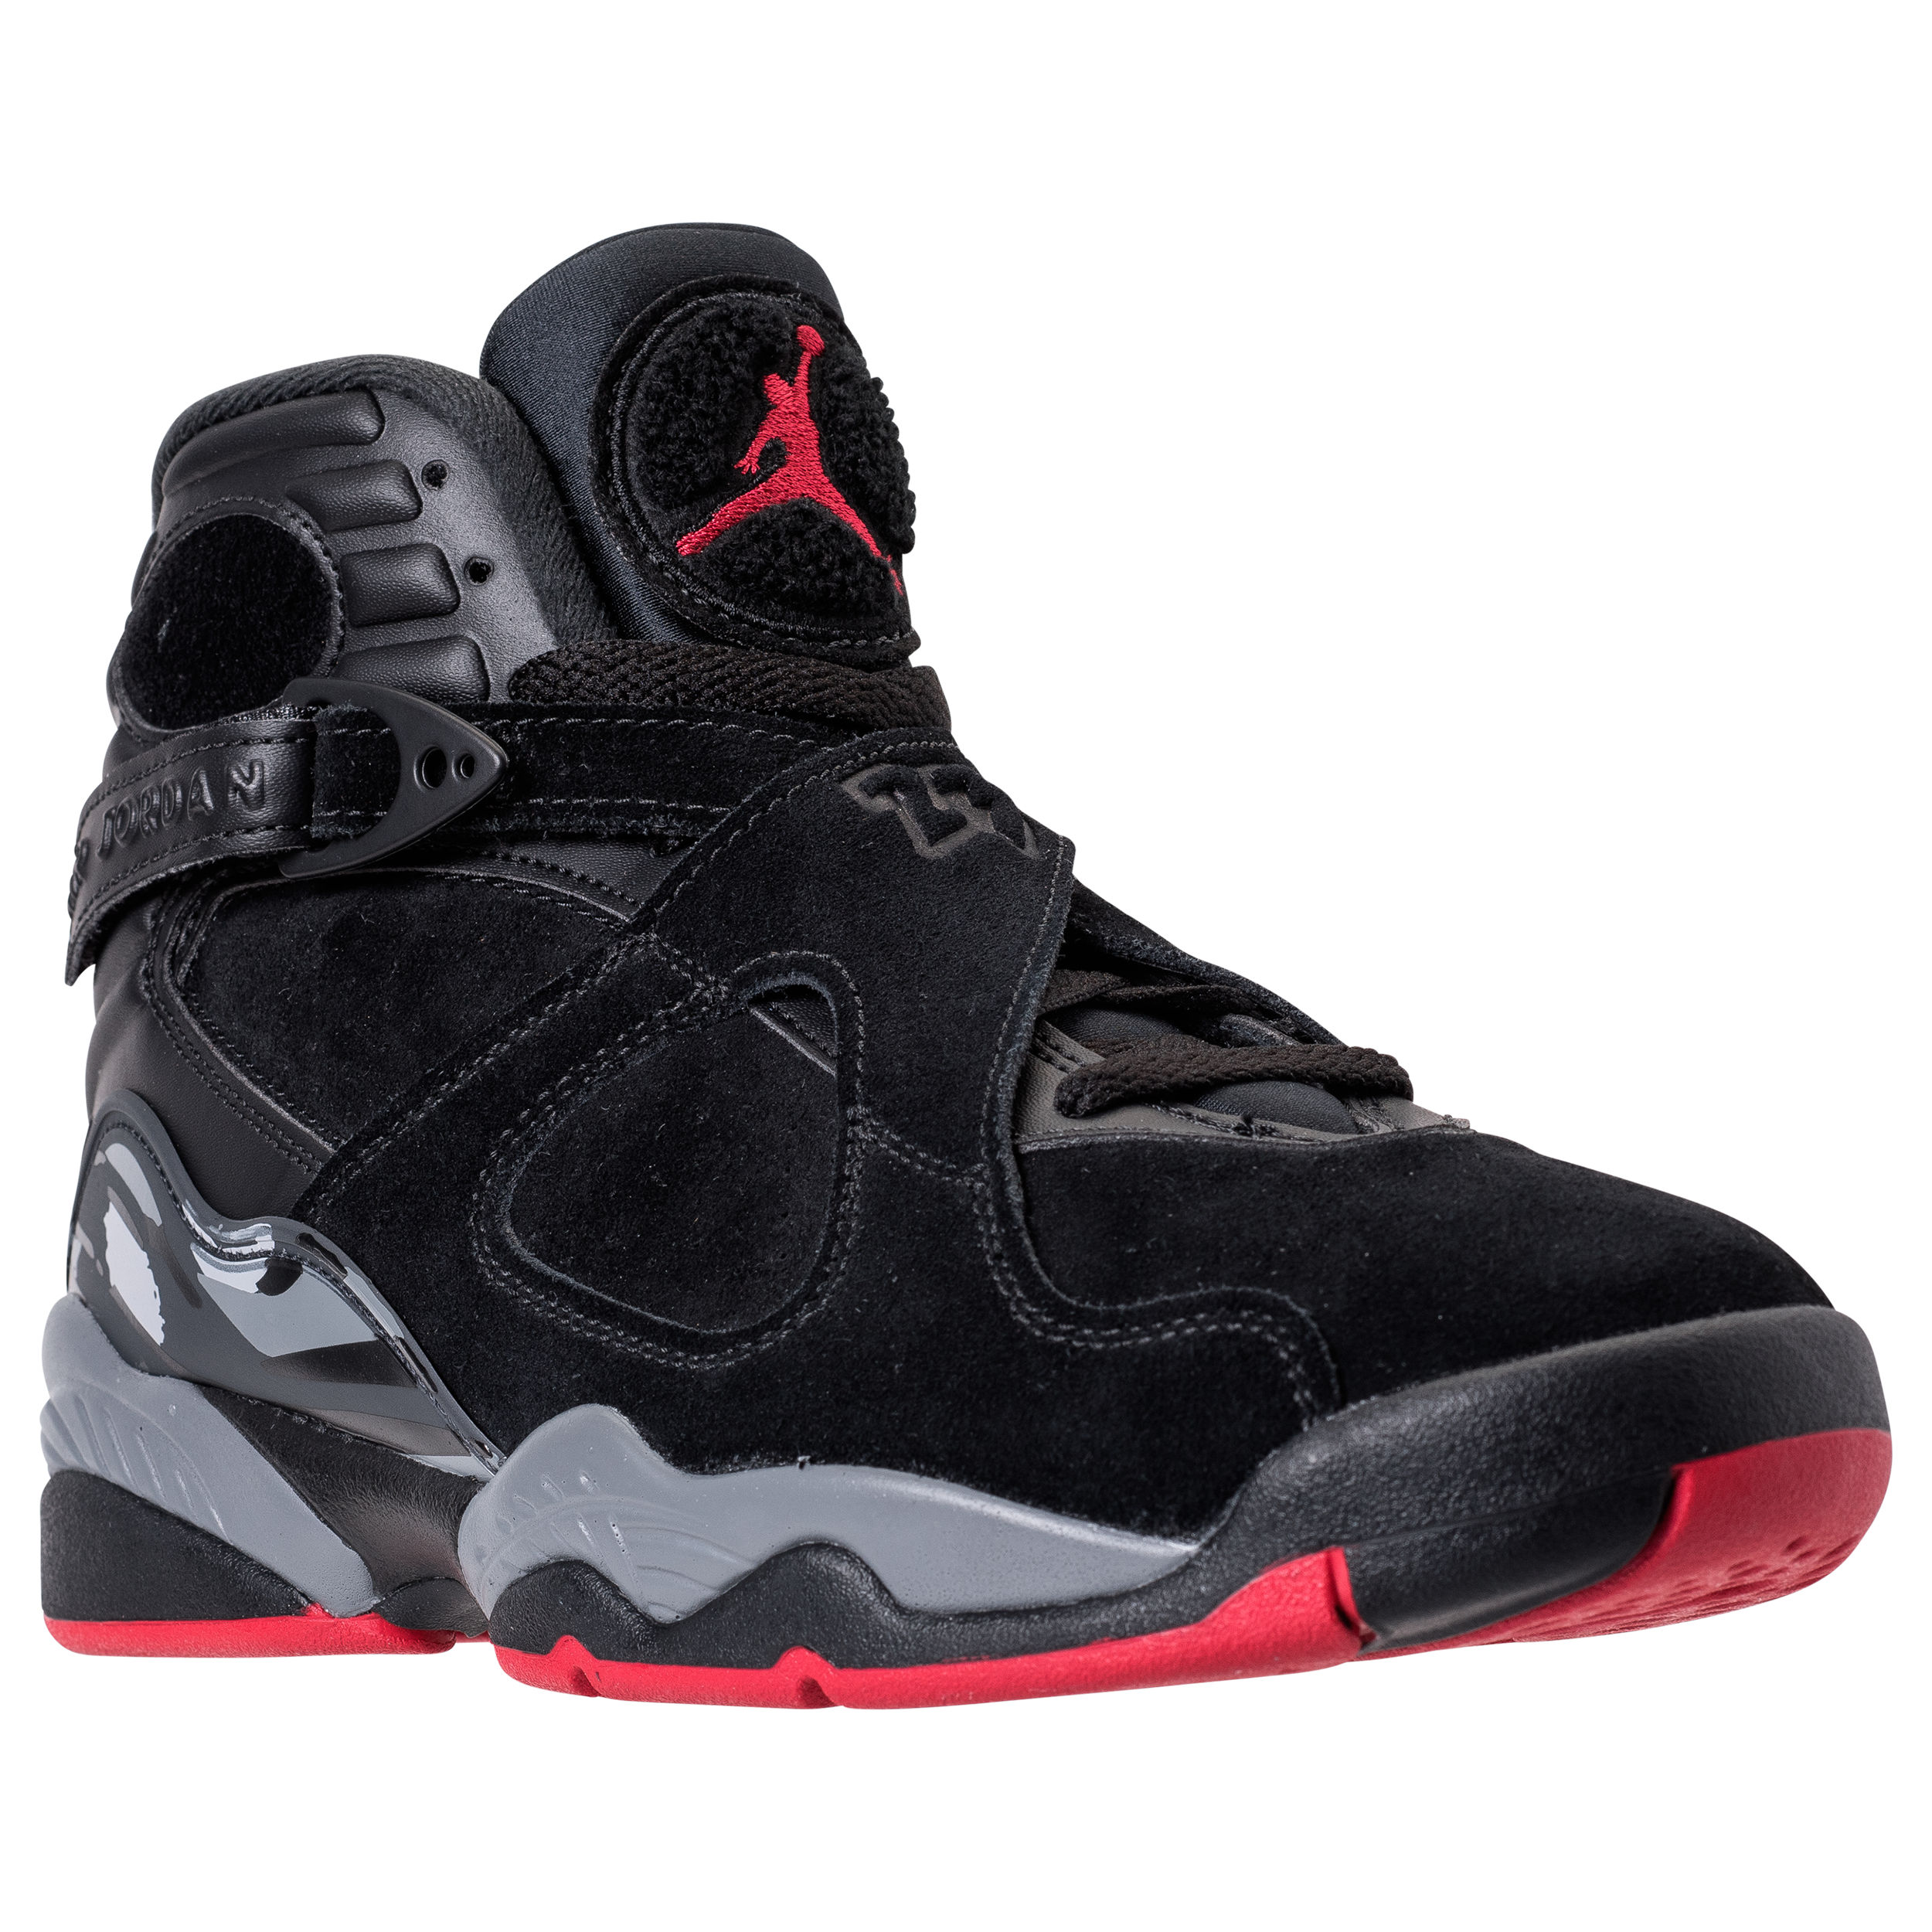 The Air Jordan 8 Retro in Black/Gym Red is Set to Debut 